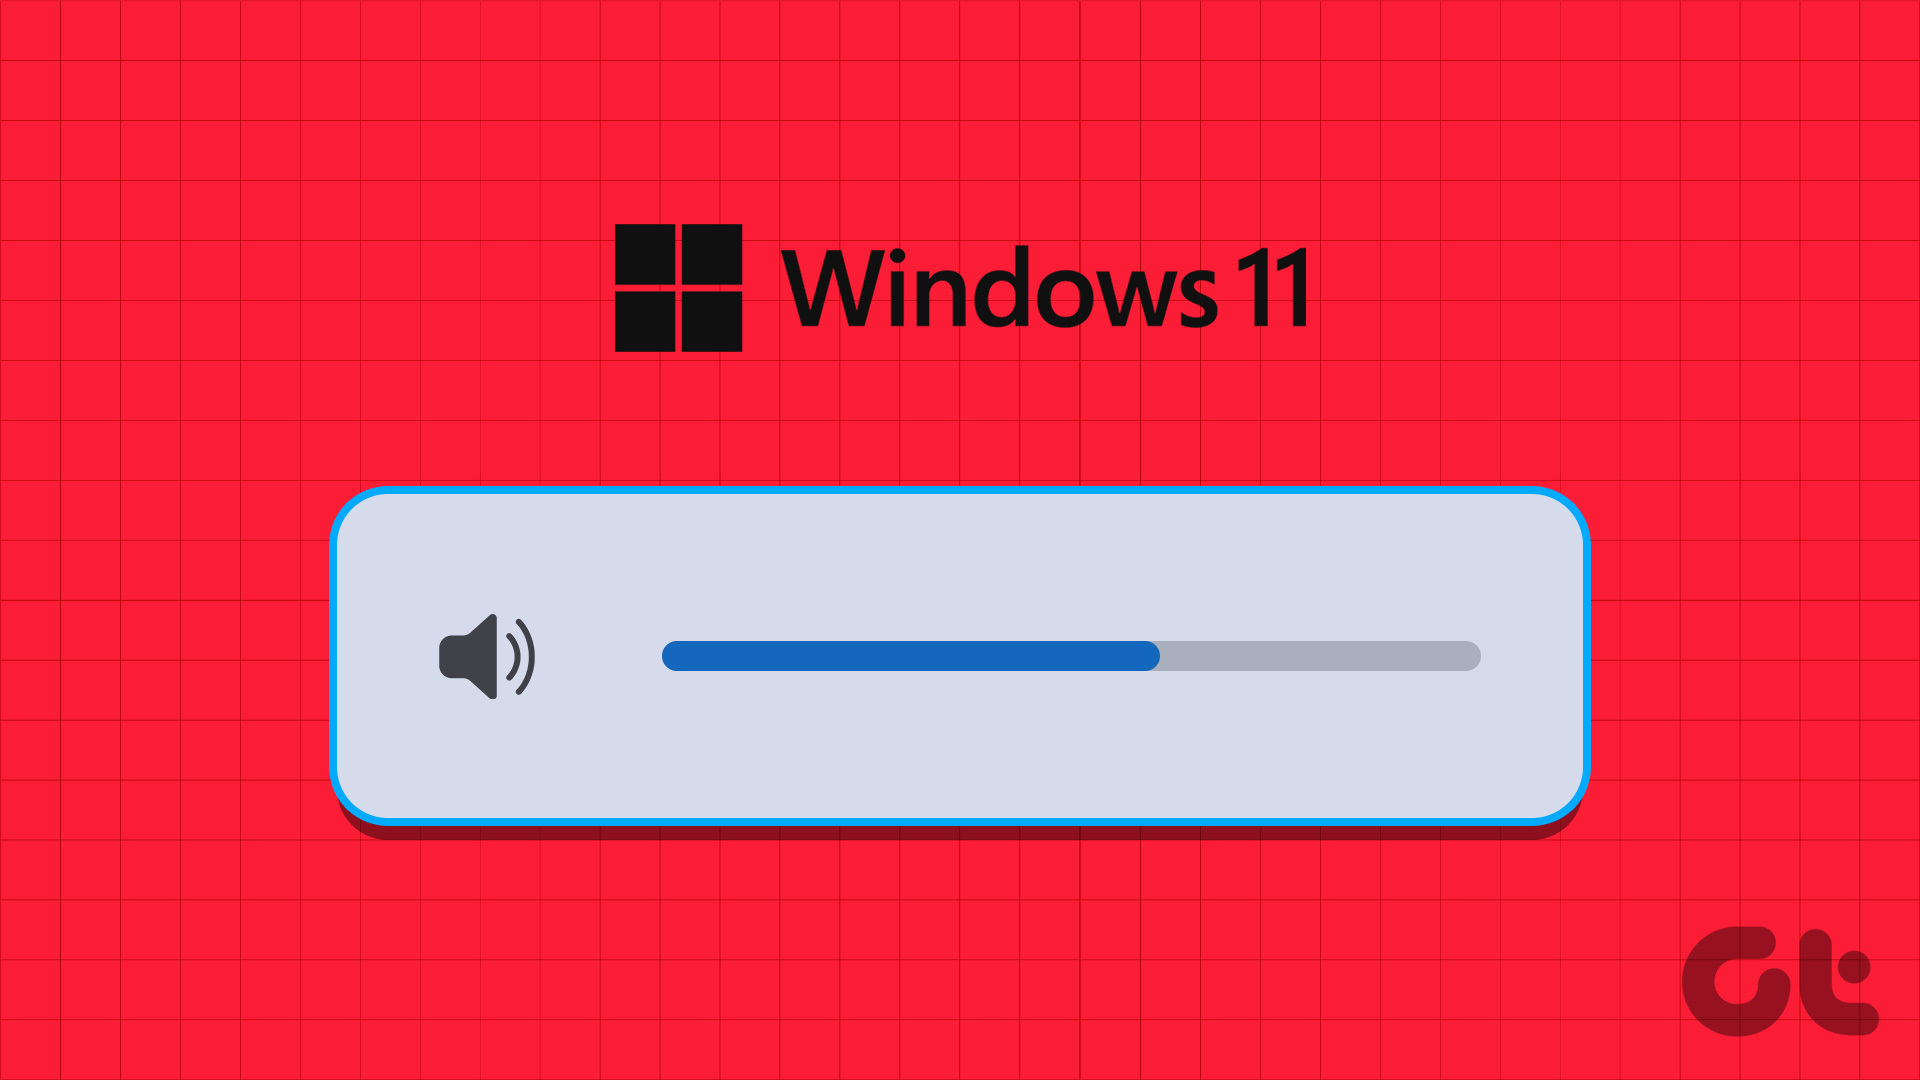 How to Change Sound Volume in Windows 11